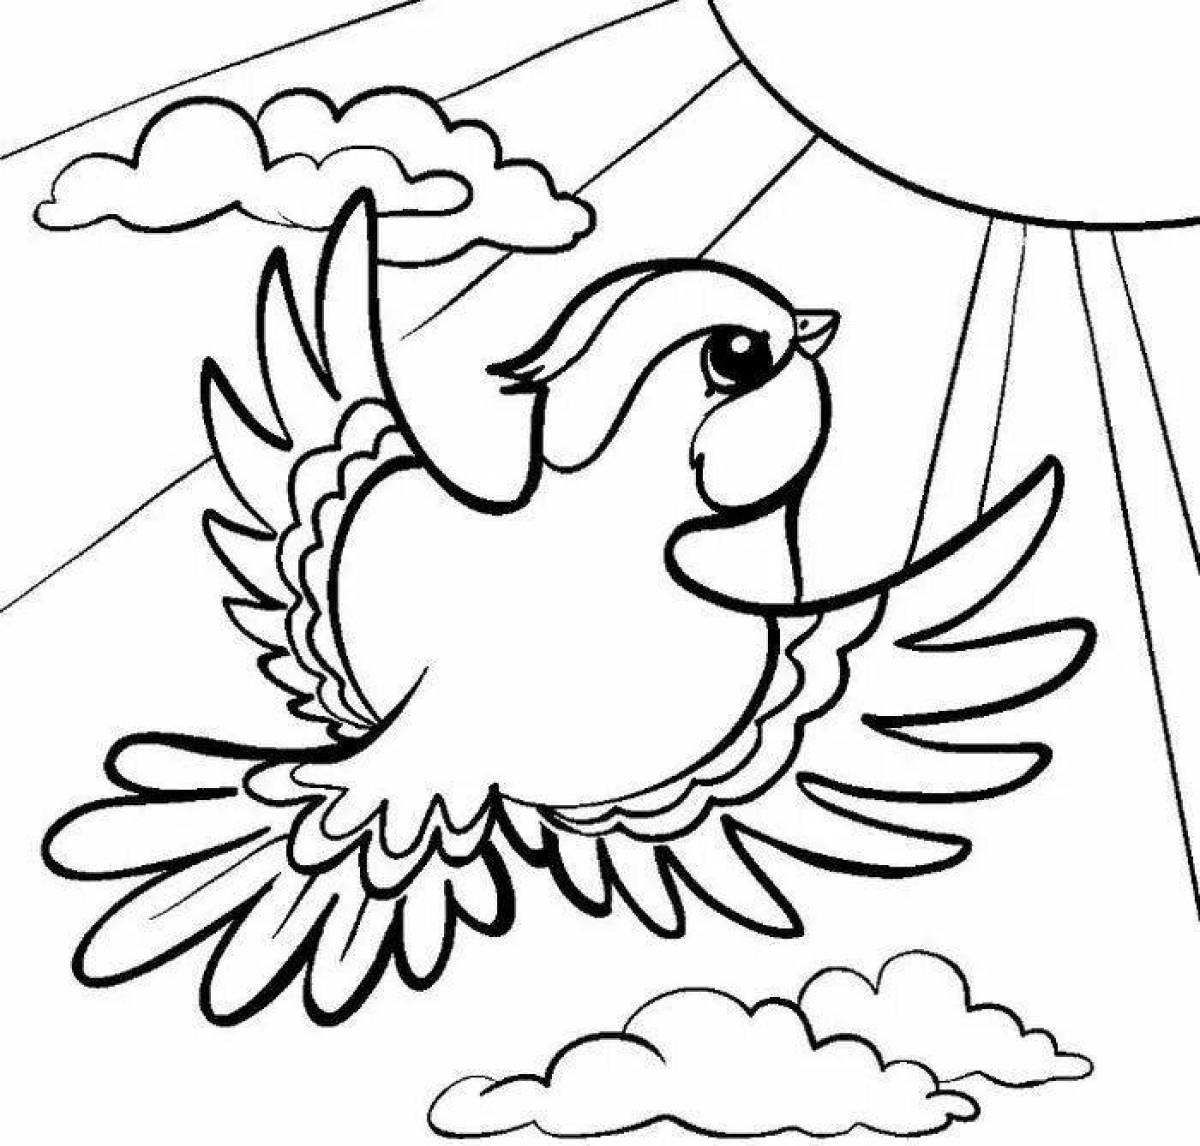 Playful children's coloring bird